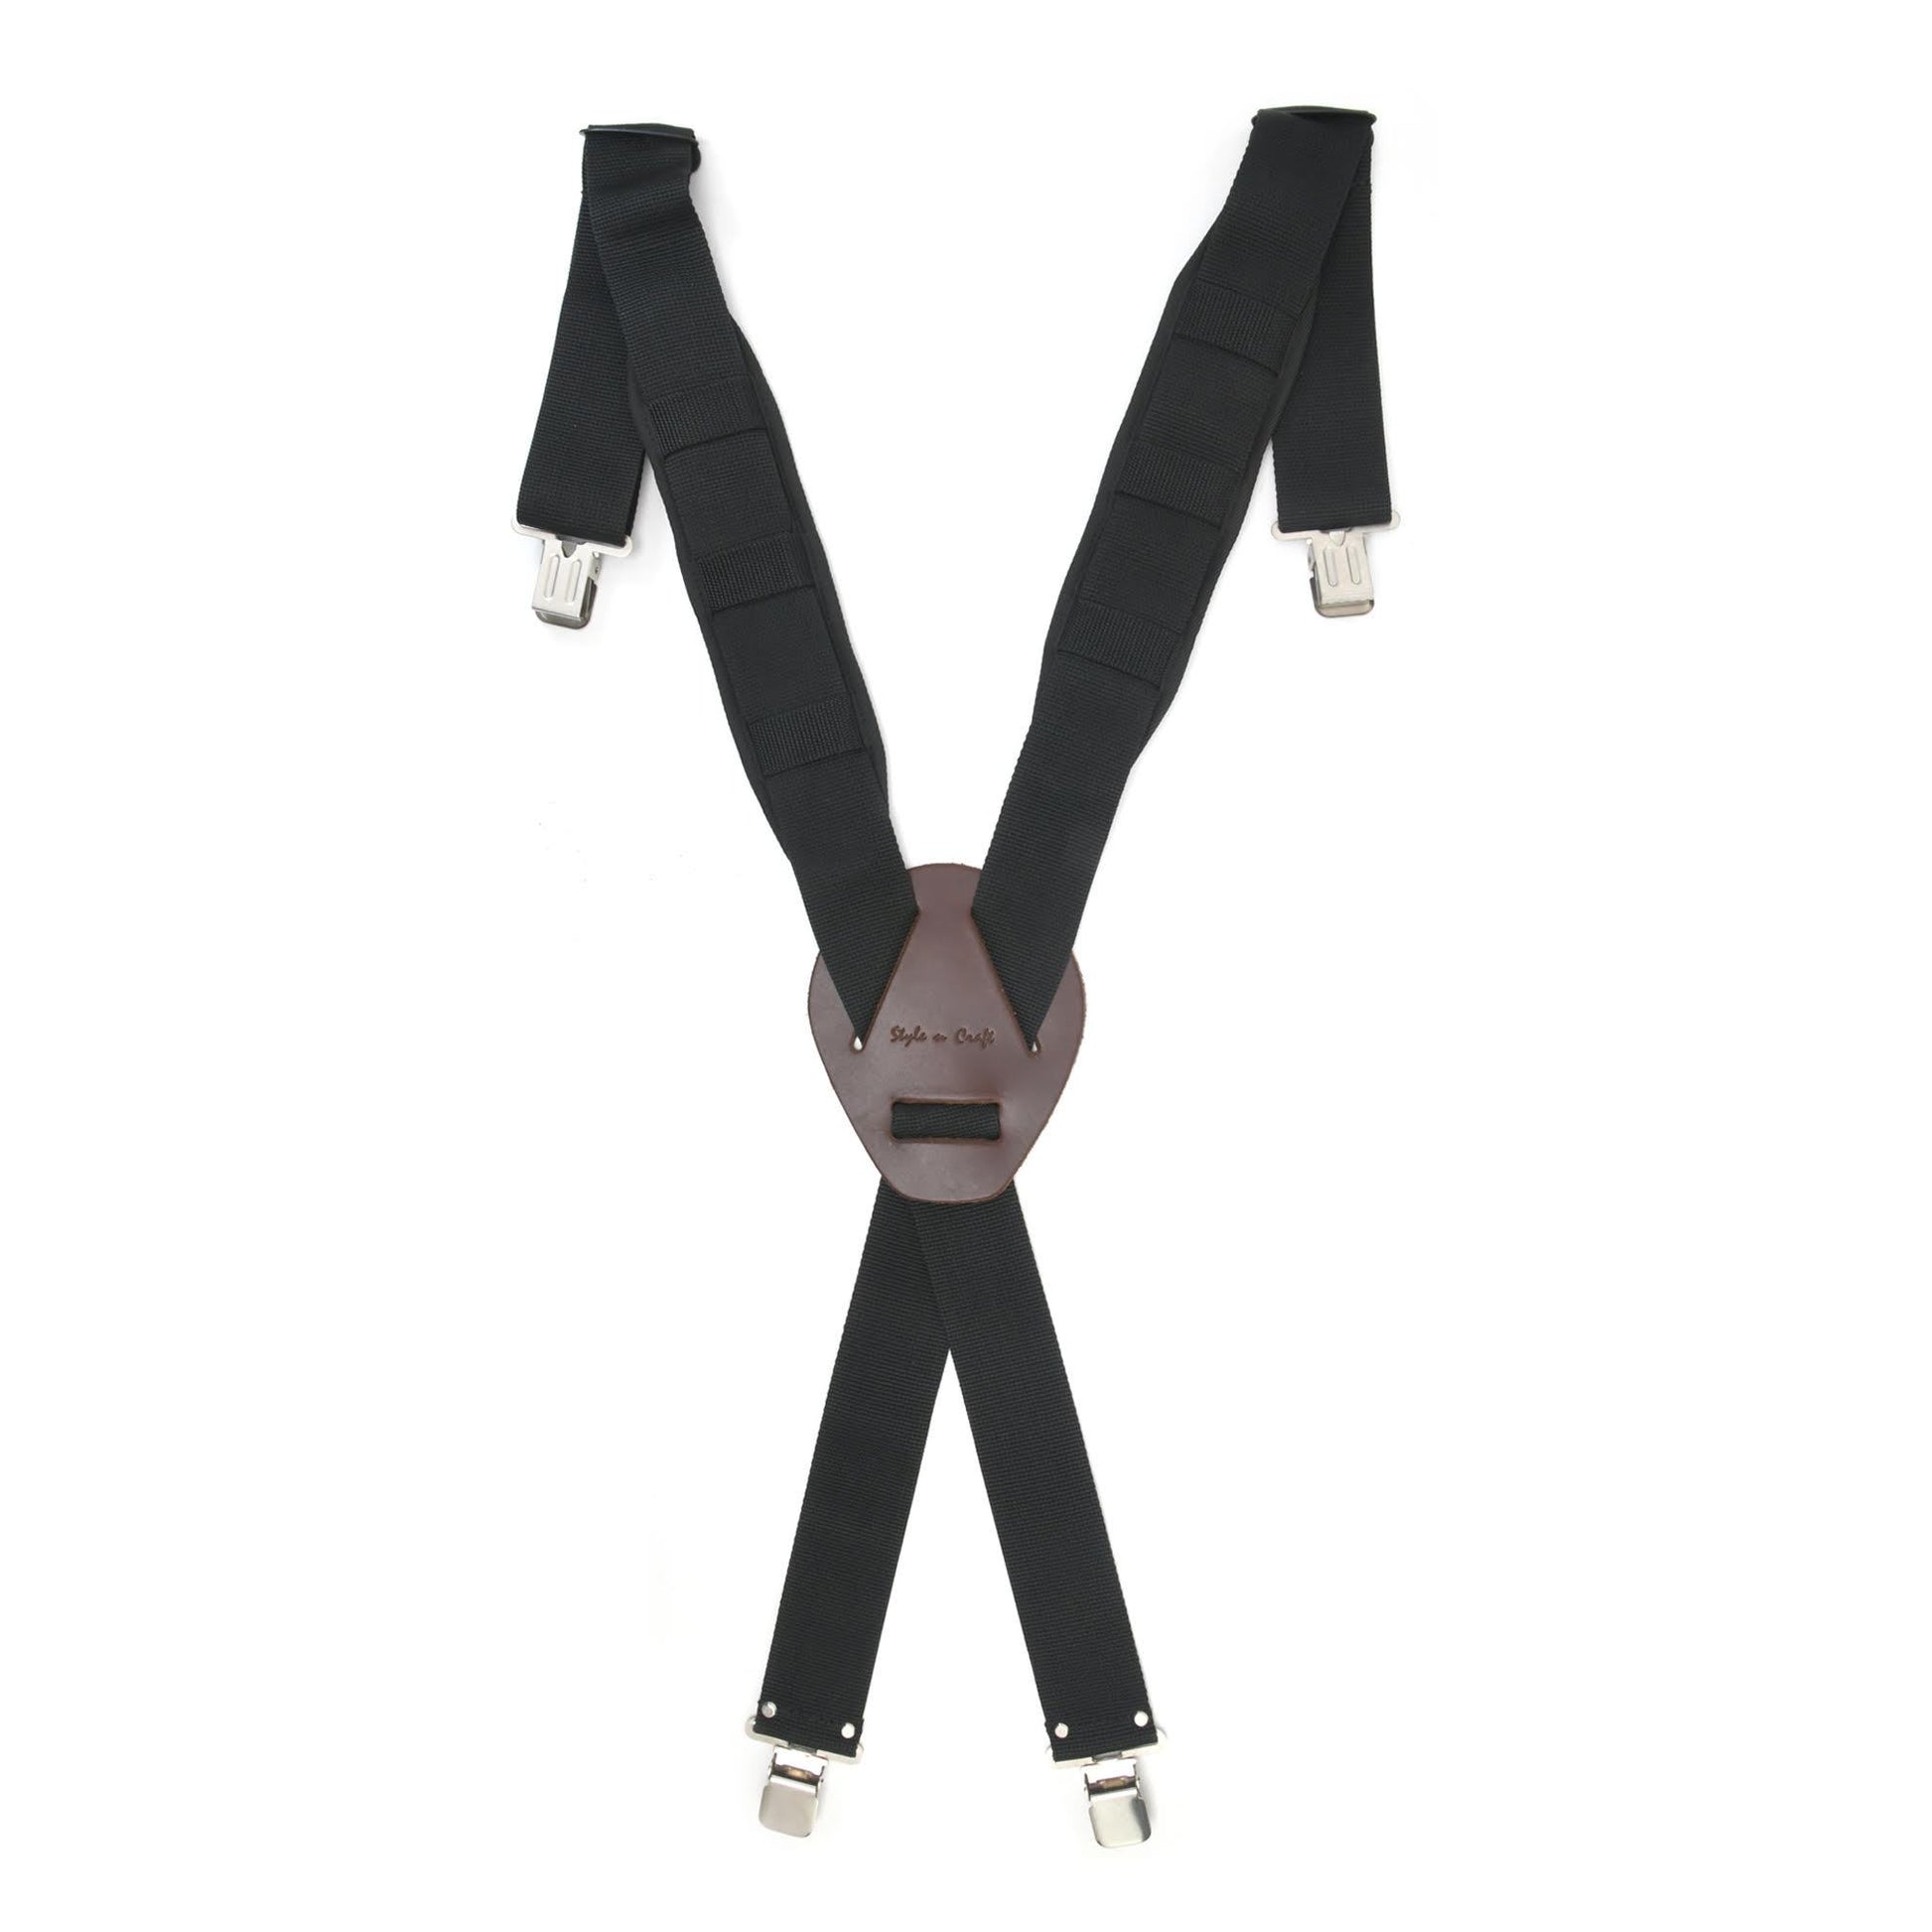  Black Suspenders For Men Heavy Duty Clips 2 Inch